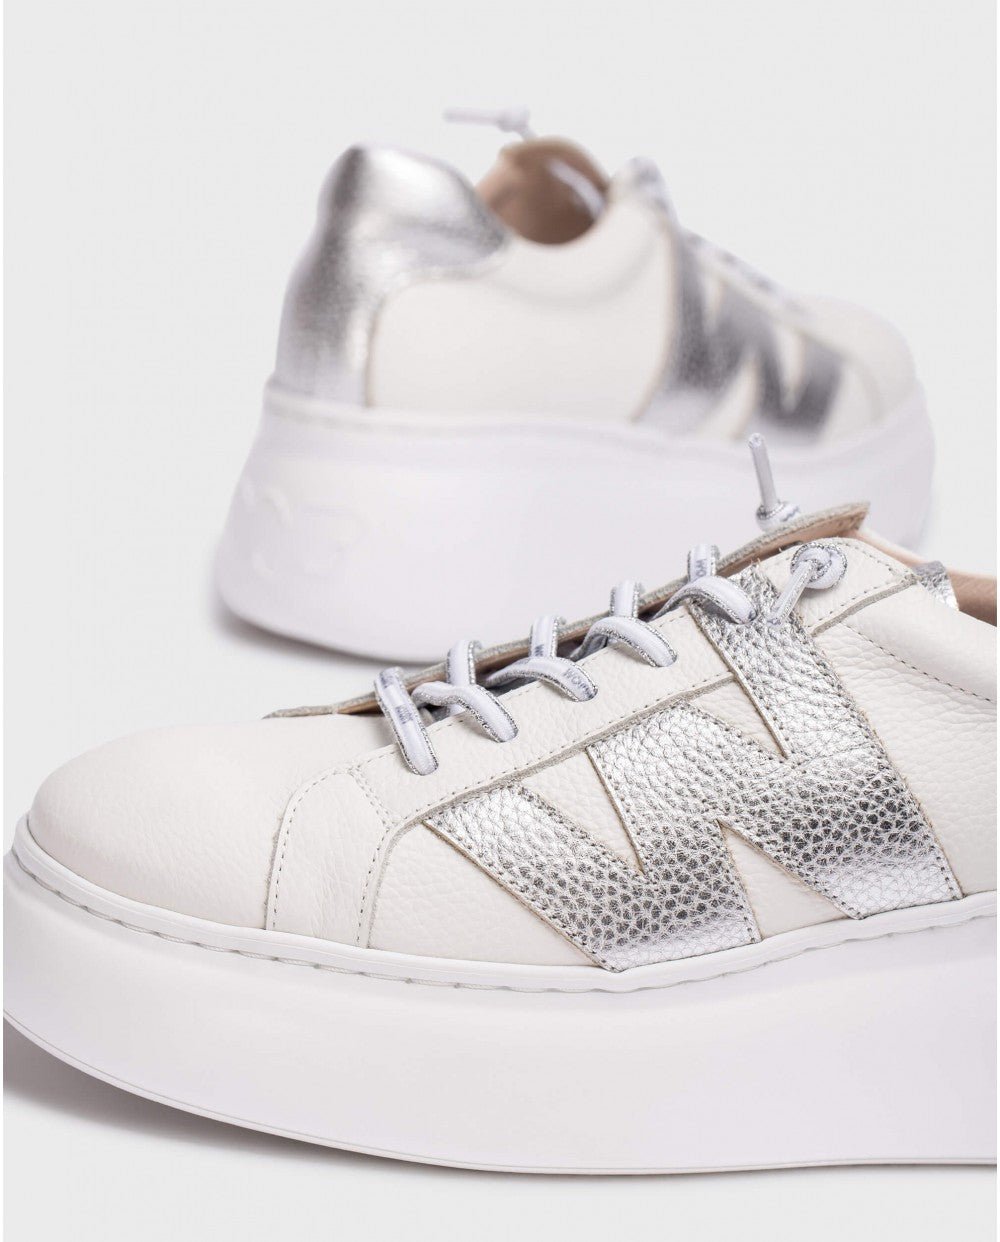 'Zurich' women's sneaker - white - Chaplinshoes'Zurich' women's sneaker - whiteWonders